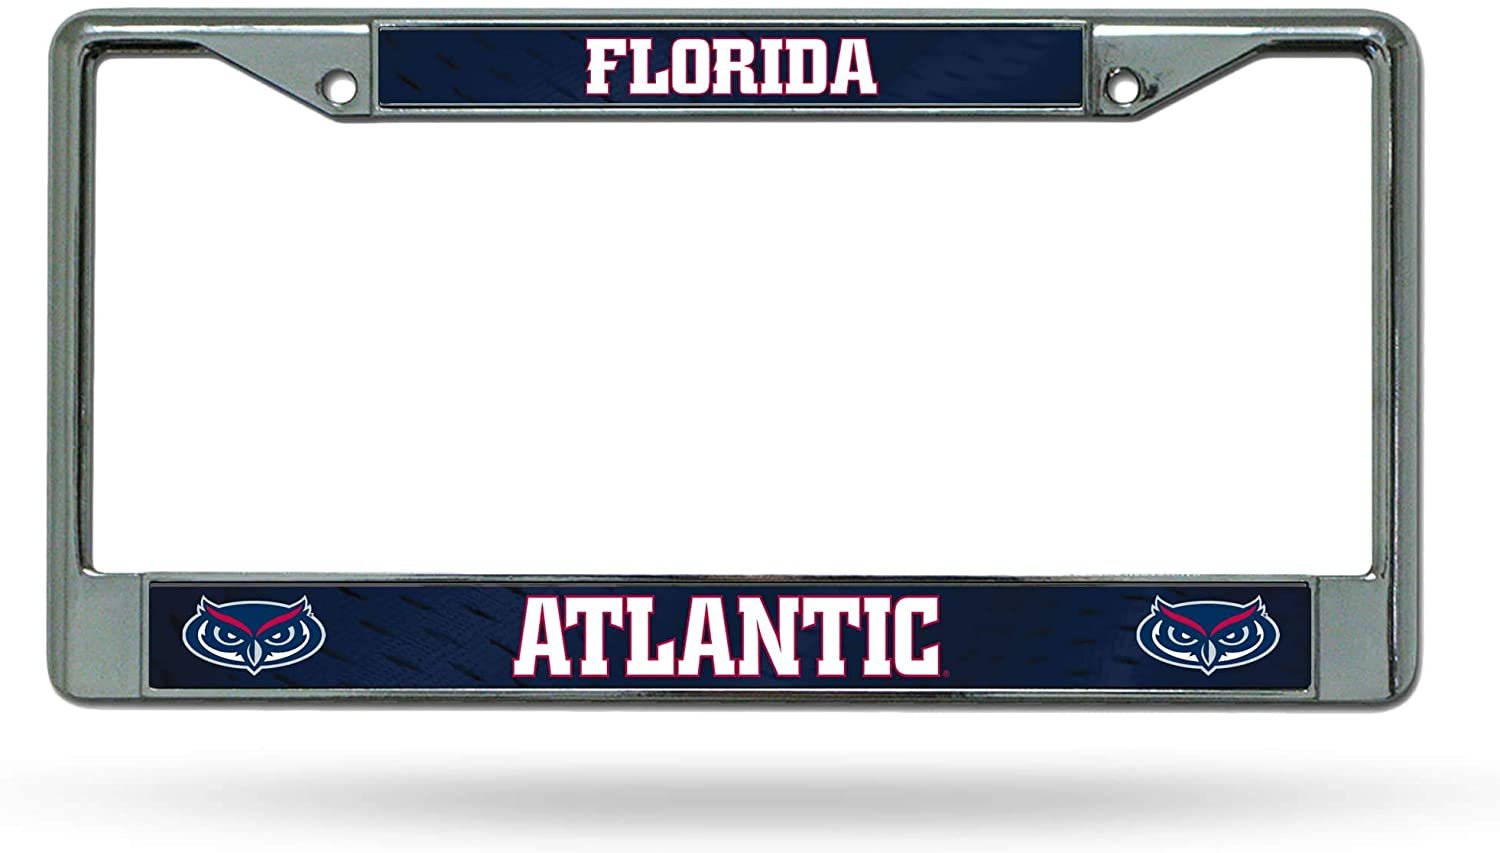 Florida Atlantic University Owls Premium Metal License Plate Frame Chrome Tag Cover, 12x6 Inch